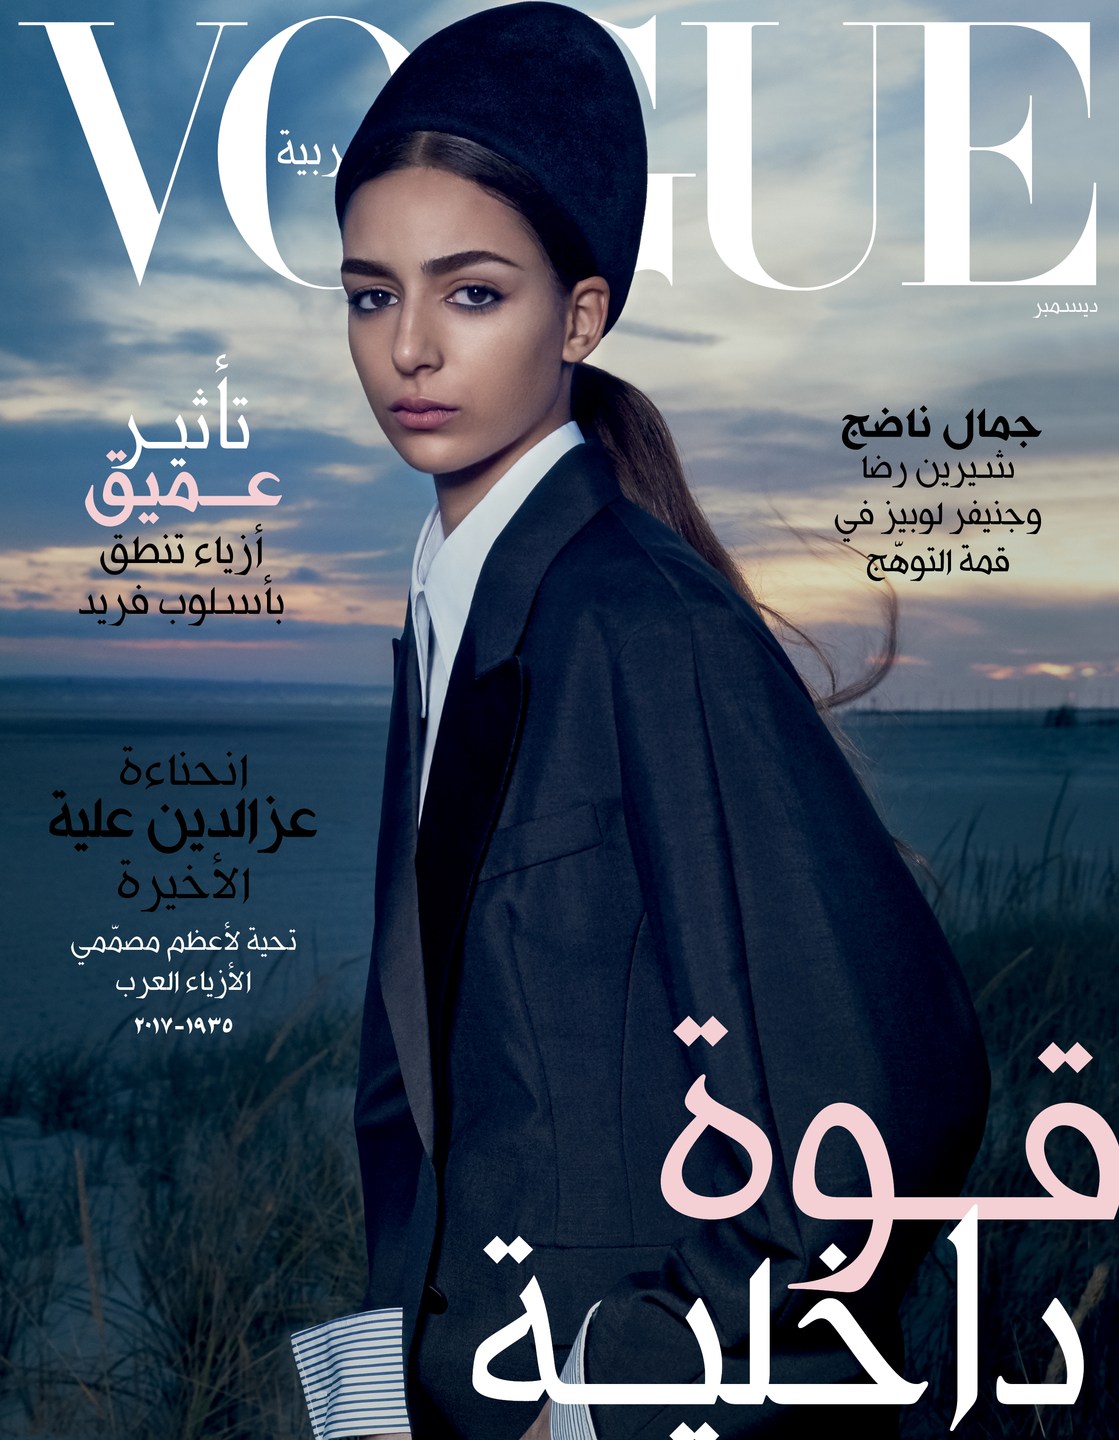 Nora Attal in Vogue Arabia December 2017 by Emma Summerton